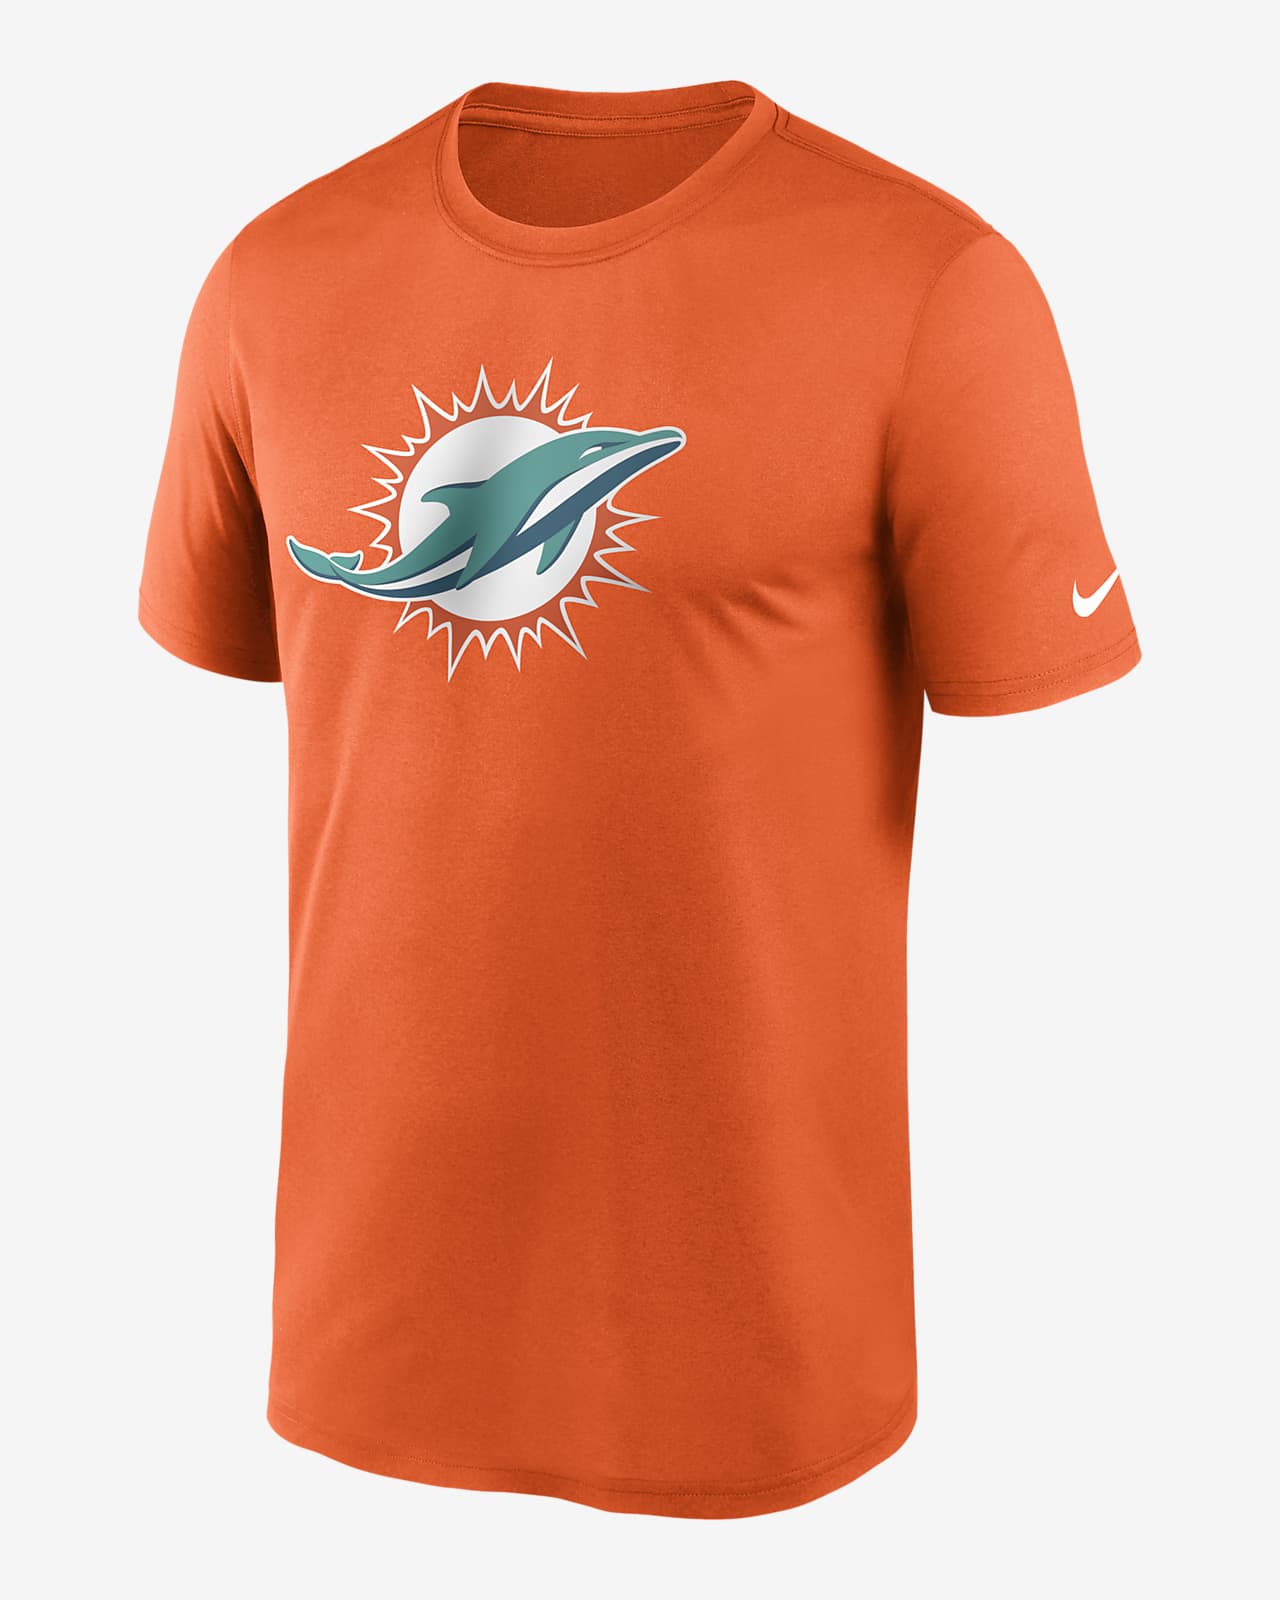 Nike Dri-FIT Logo Legend (NFL Miami Dolphins) Men's T-Shirt